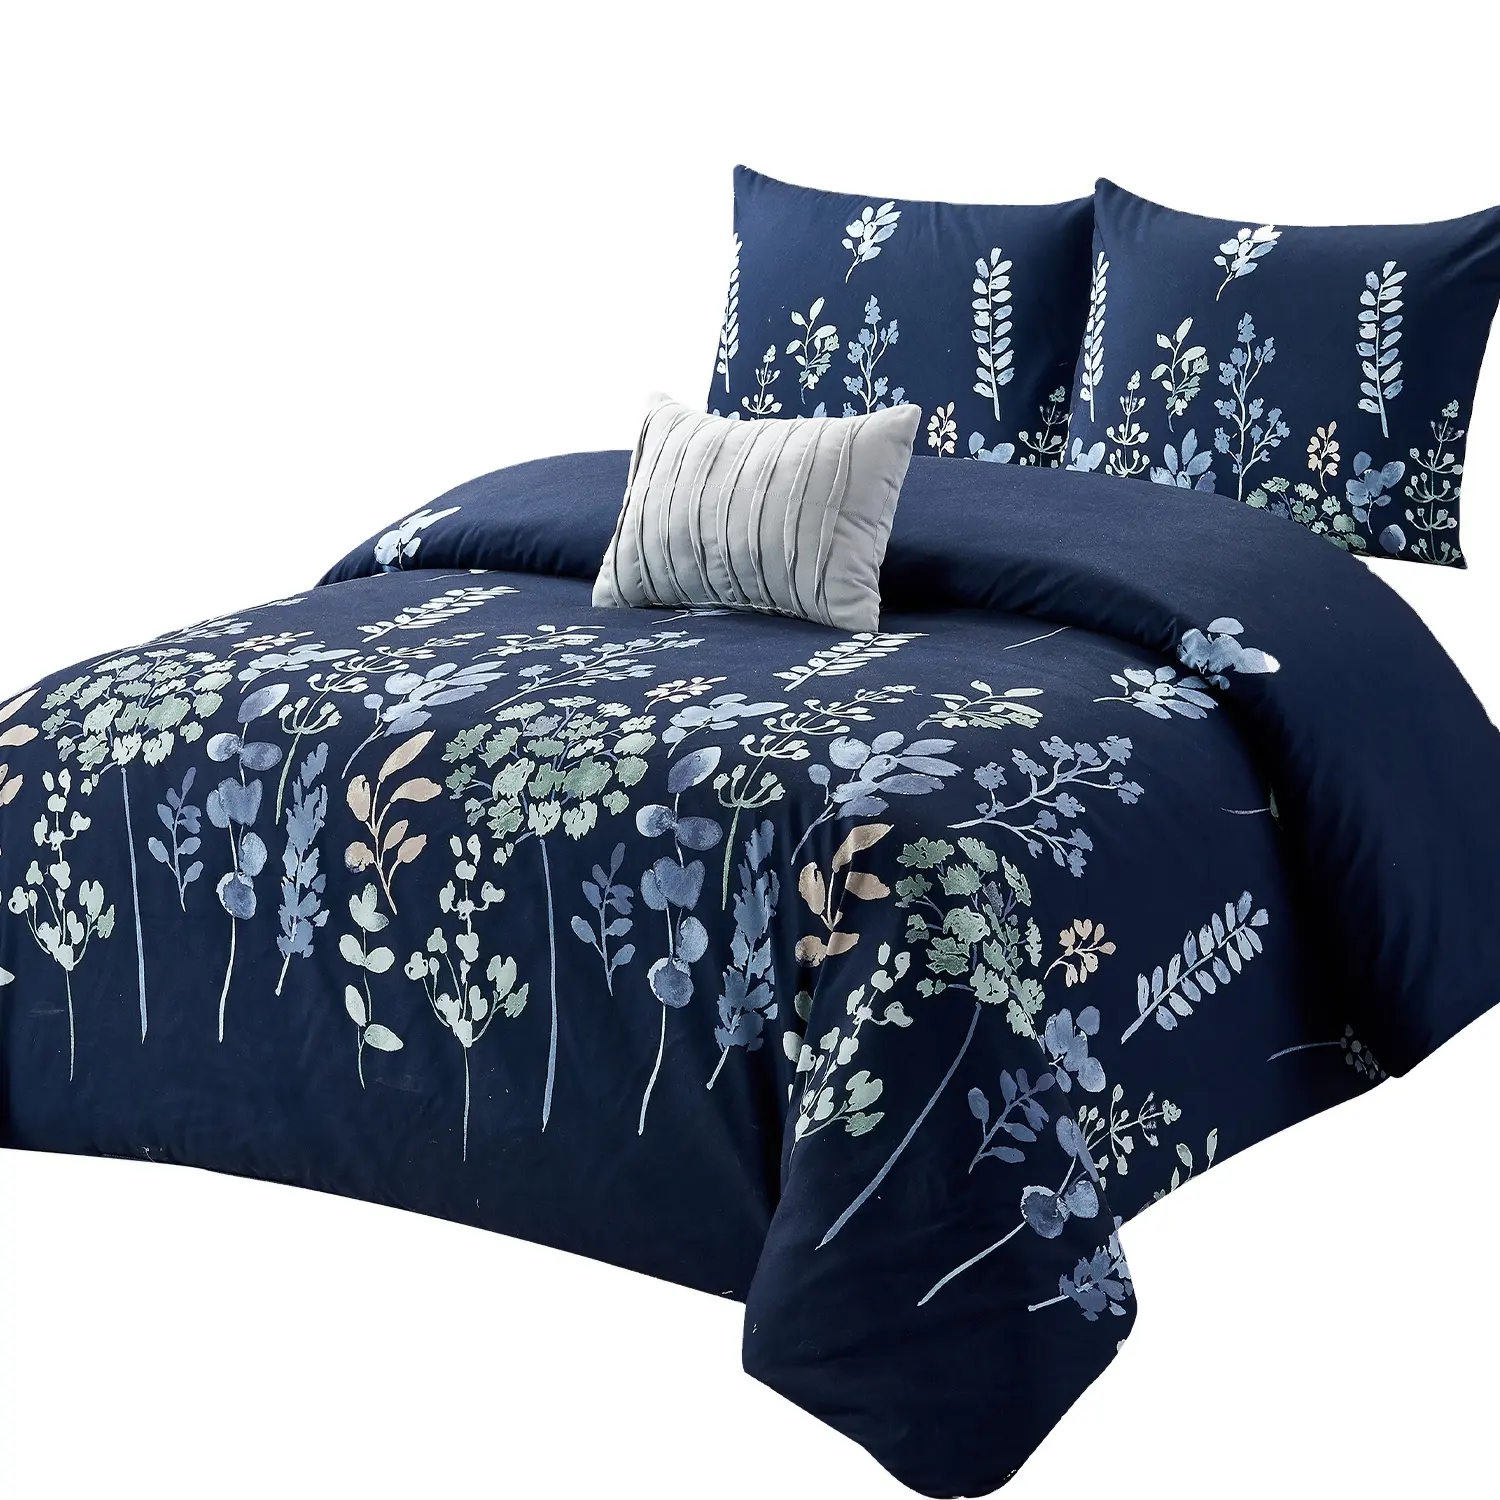 duvet covers comforters and duvet covers bedding twin/queen/king bed comforter set bed sheet with comforter bedding set